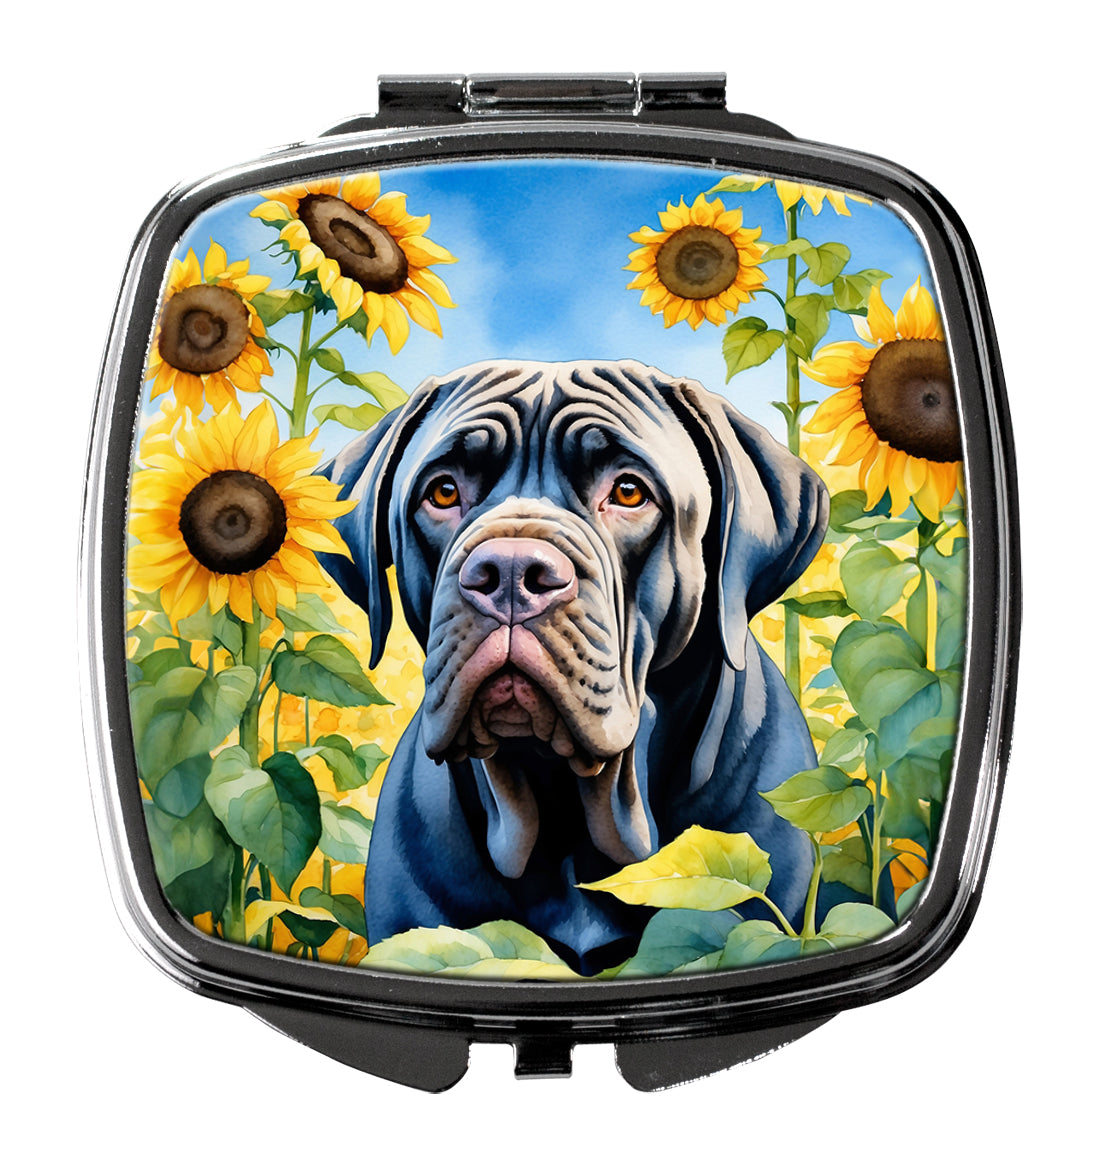 Buy this Neapolitan Mastiff in Sunflowers Compact Mirror